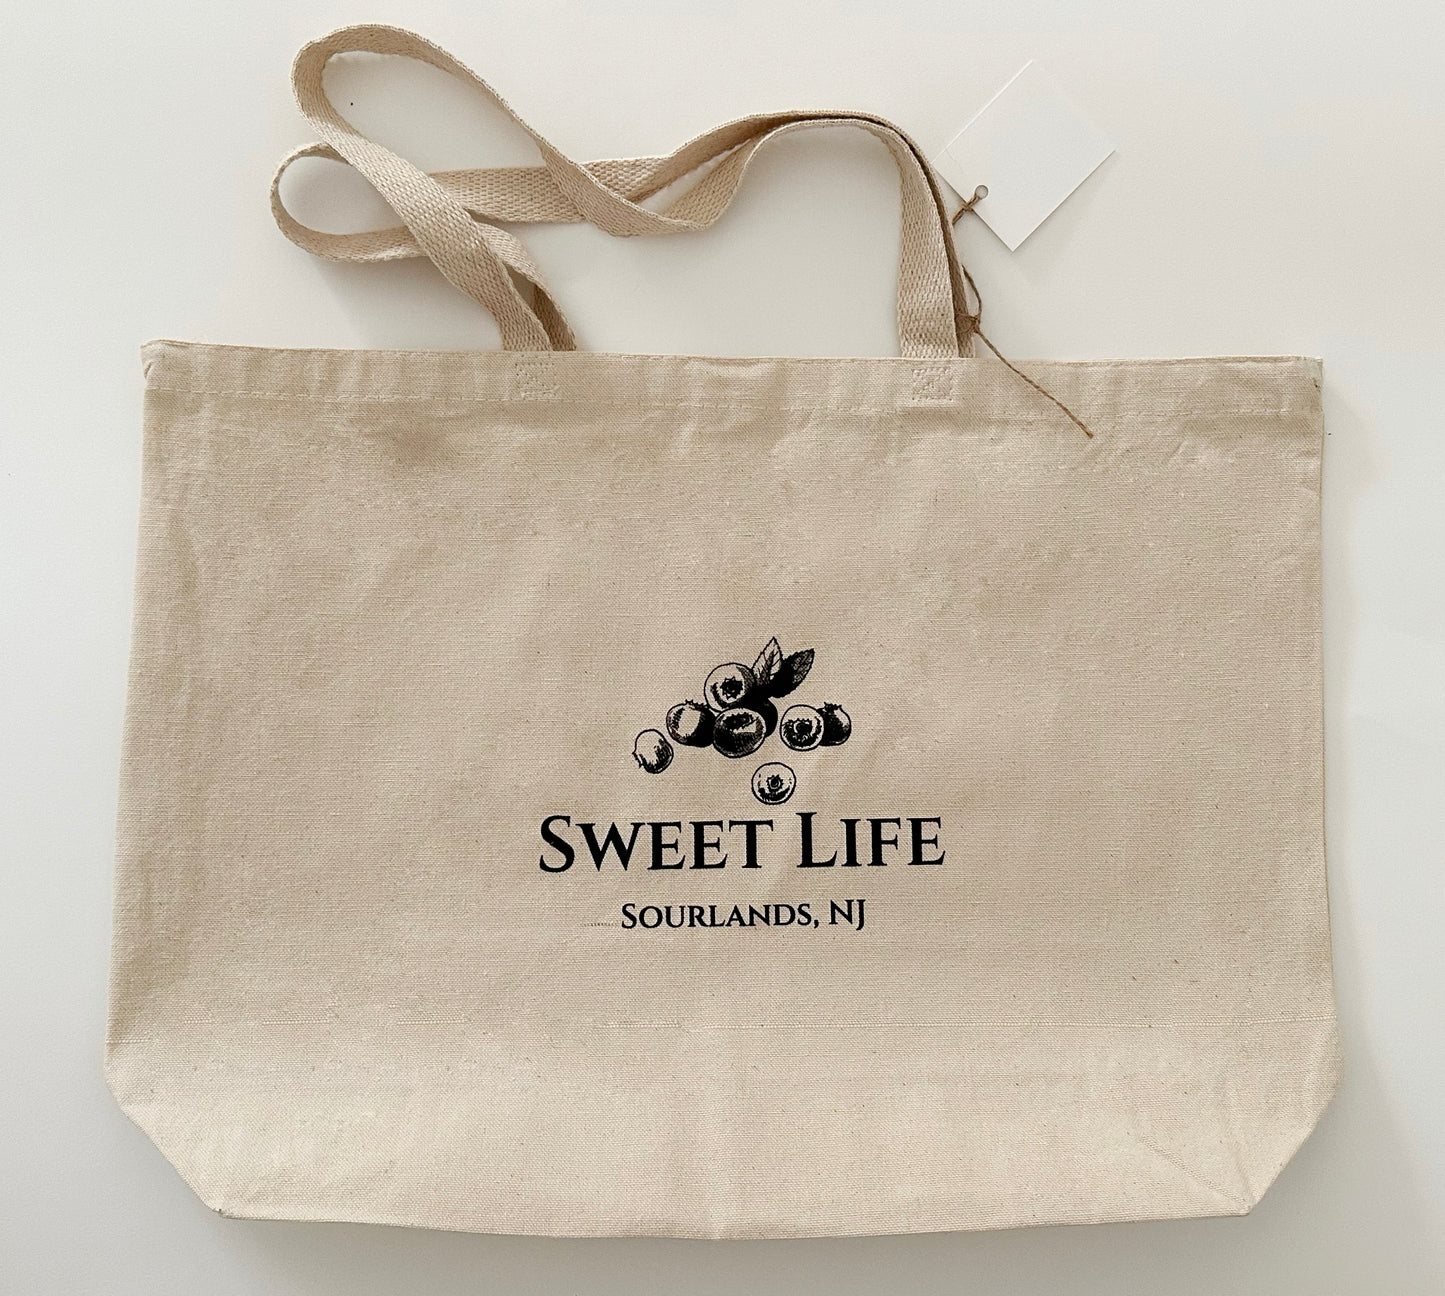 Sweet Life Sourlands, NJ - Tote Bag